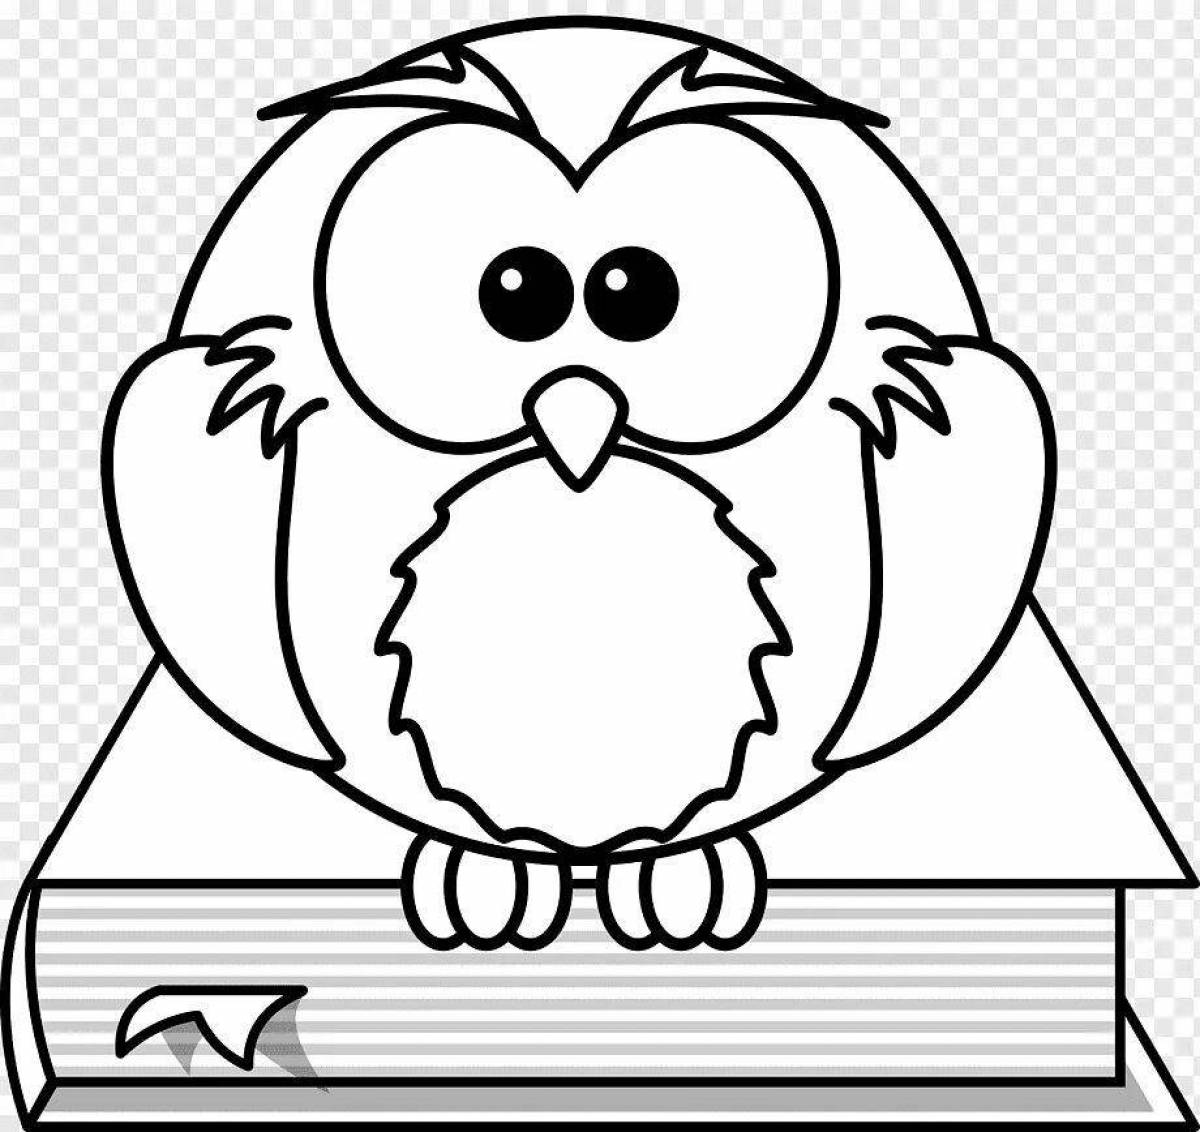 Wonderful smart owl coloring for kids